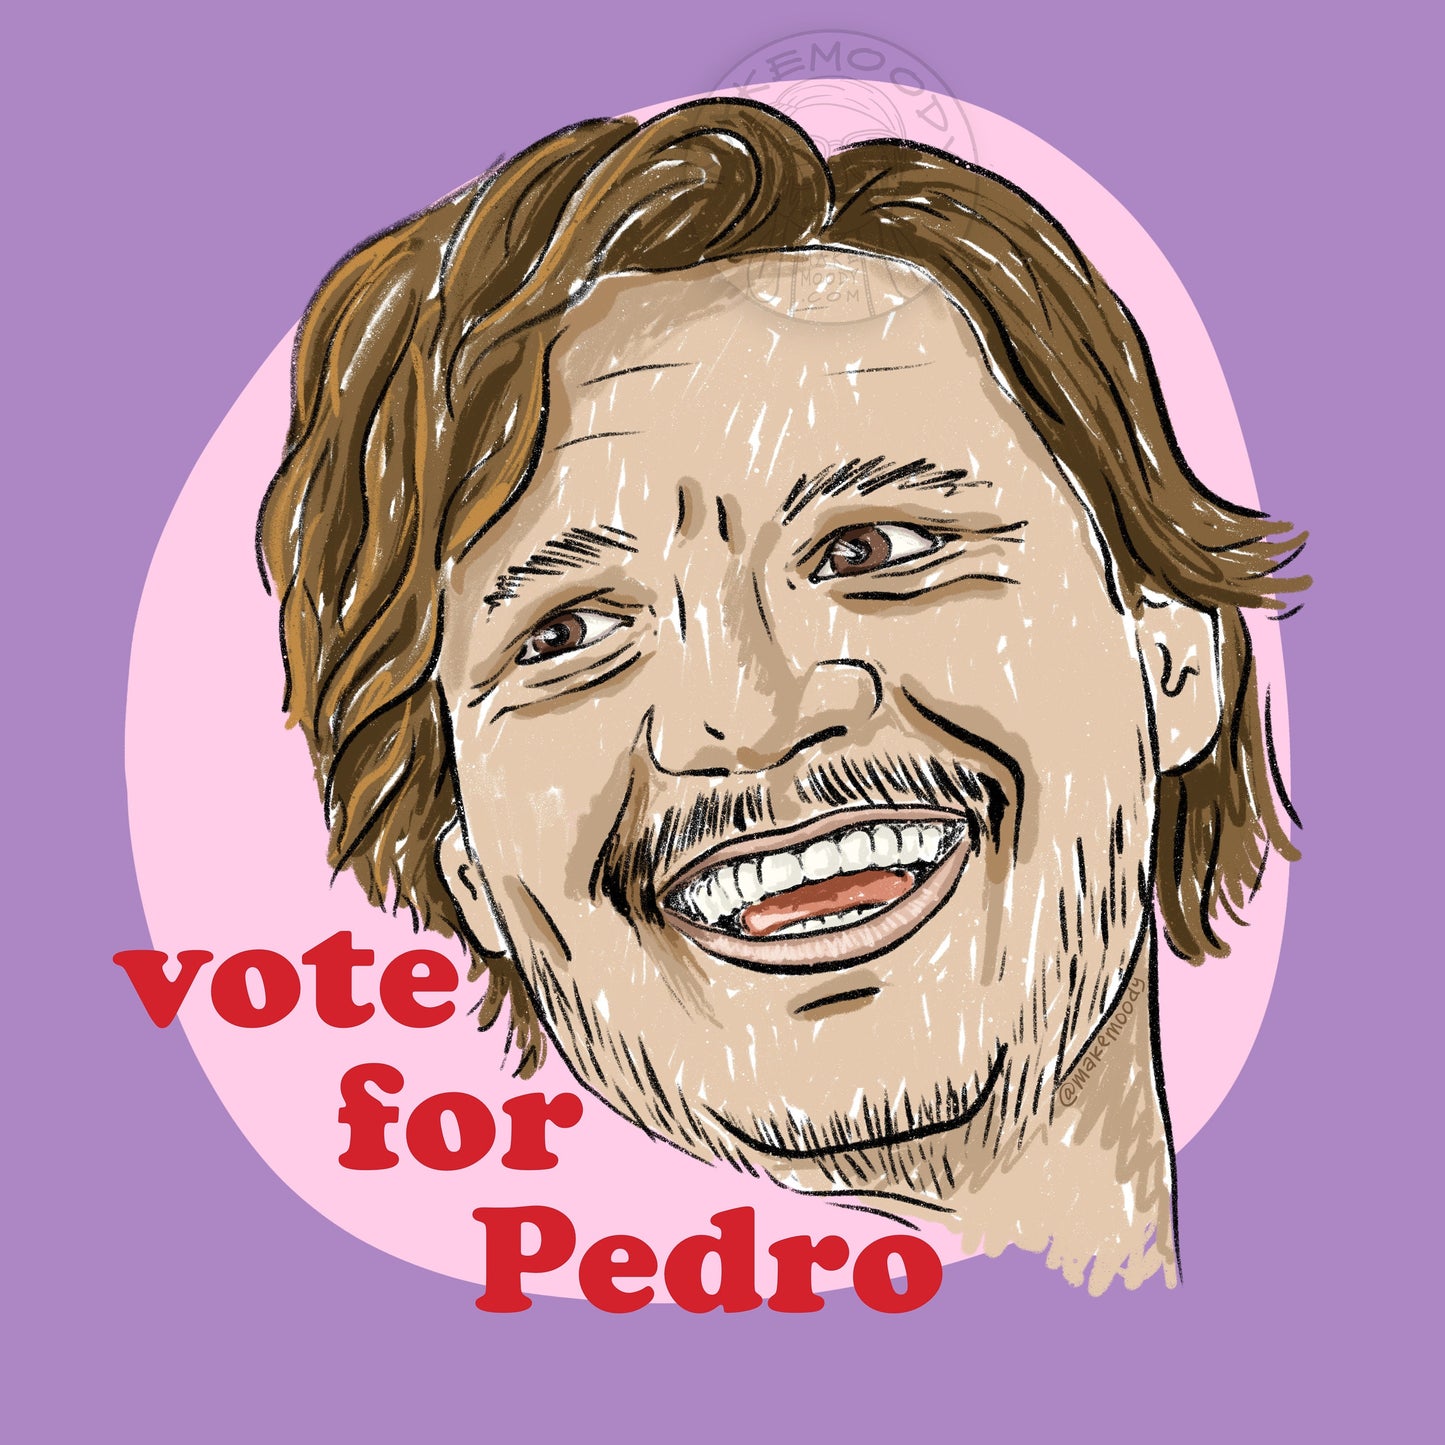 Pedro Pascal Vote for Pedro ART PRINT - Wall Art - Mando Art Print, Last of Us Art Print, Joel and Ellie Art Print, Napoleon Dynamite Art